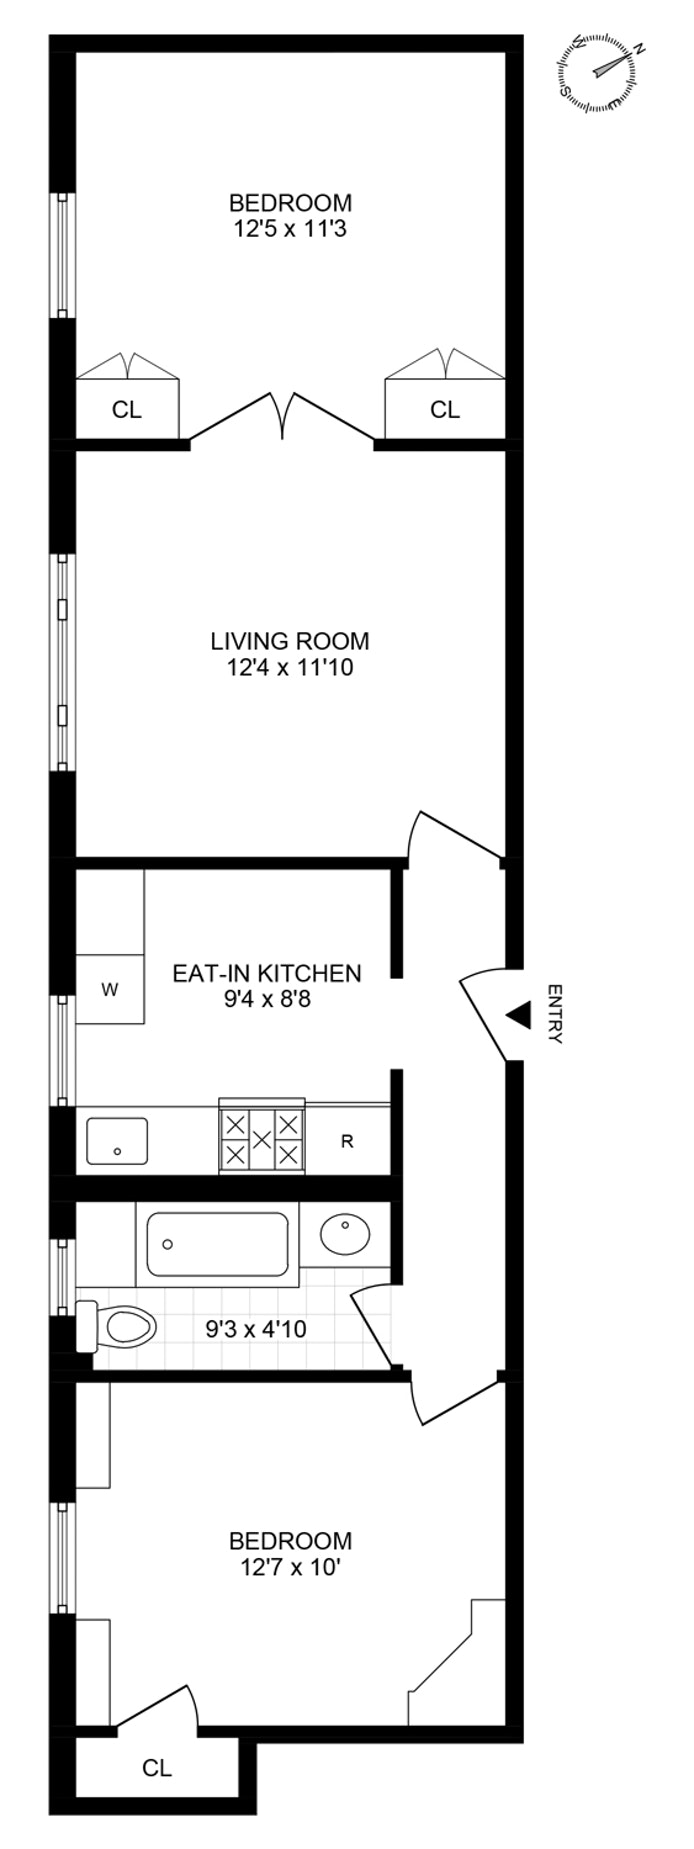 Floorplan for 238 West 106th Street, 6C